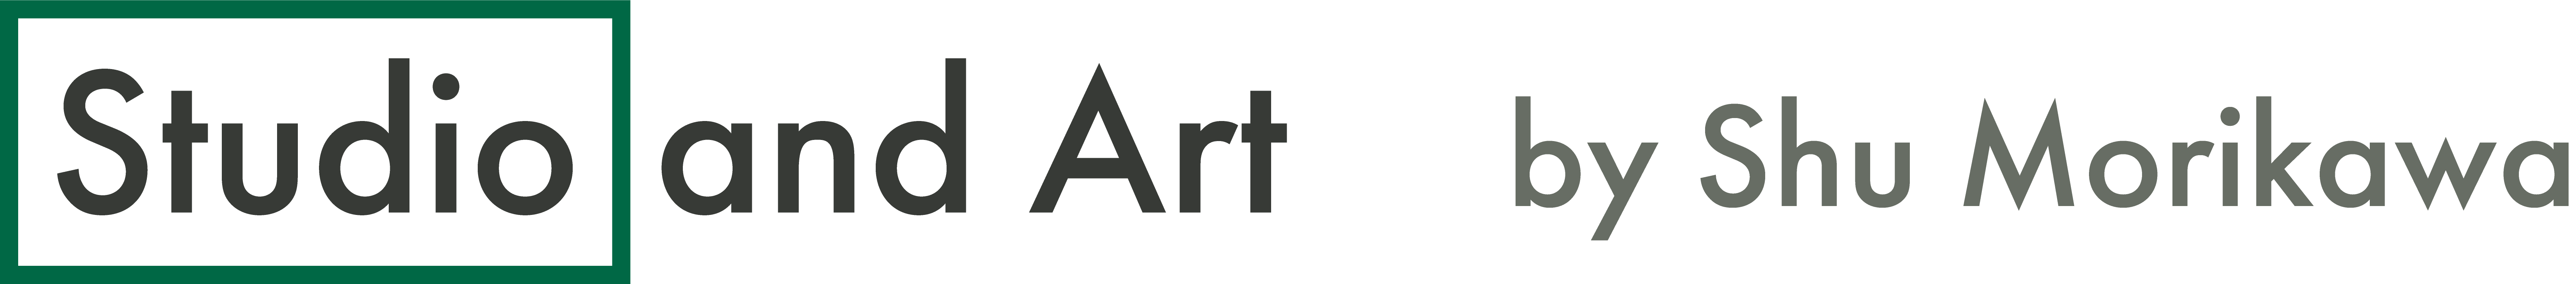 Studio and Art's logo